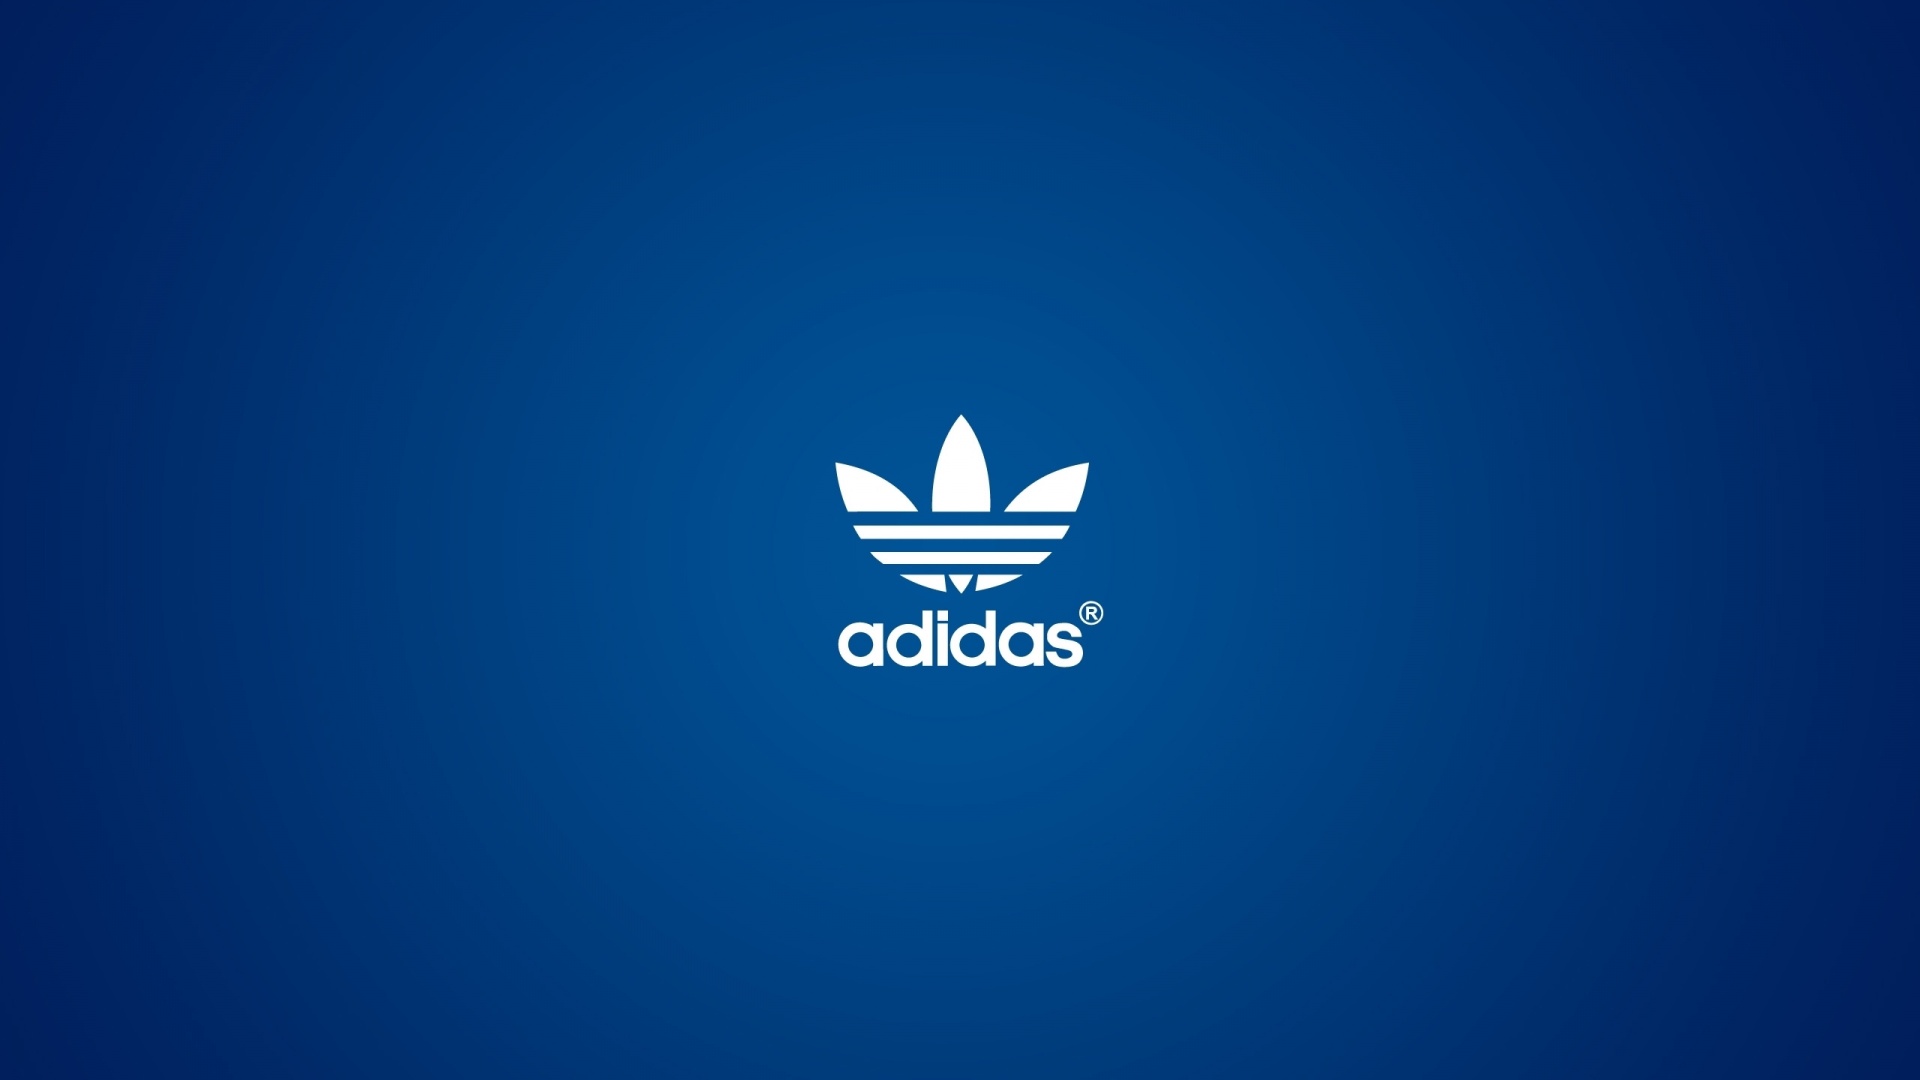 Puma Adidas Nike logo full hd wallpaper 1080p download